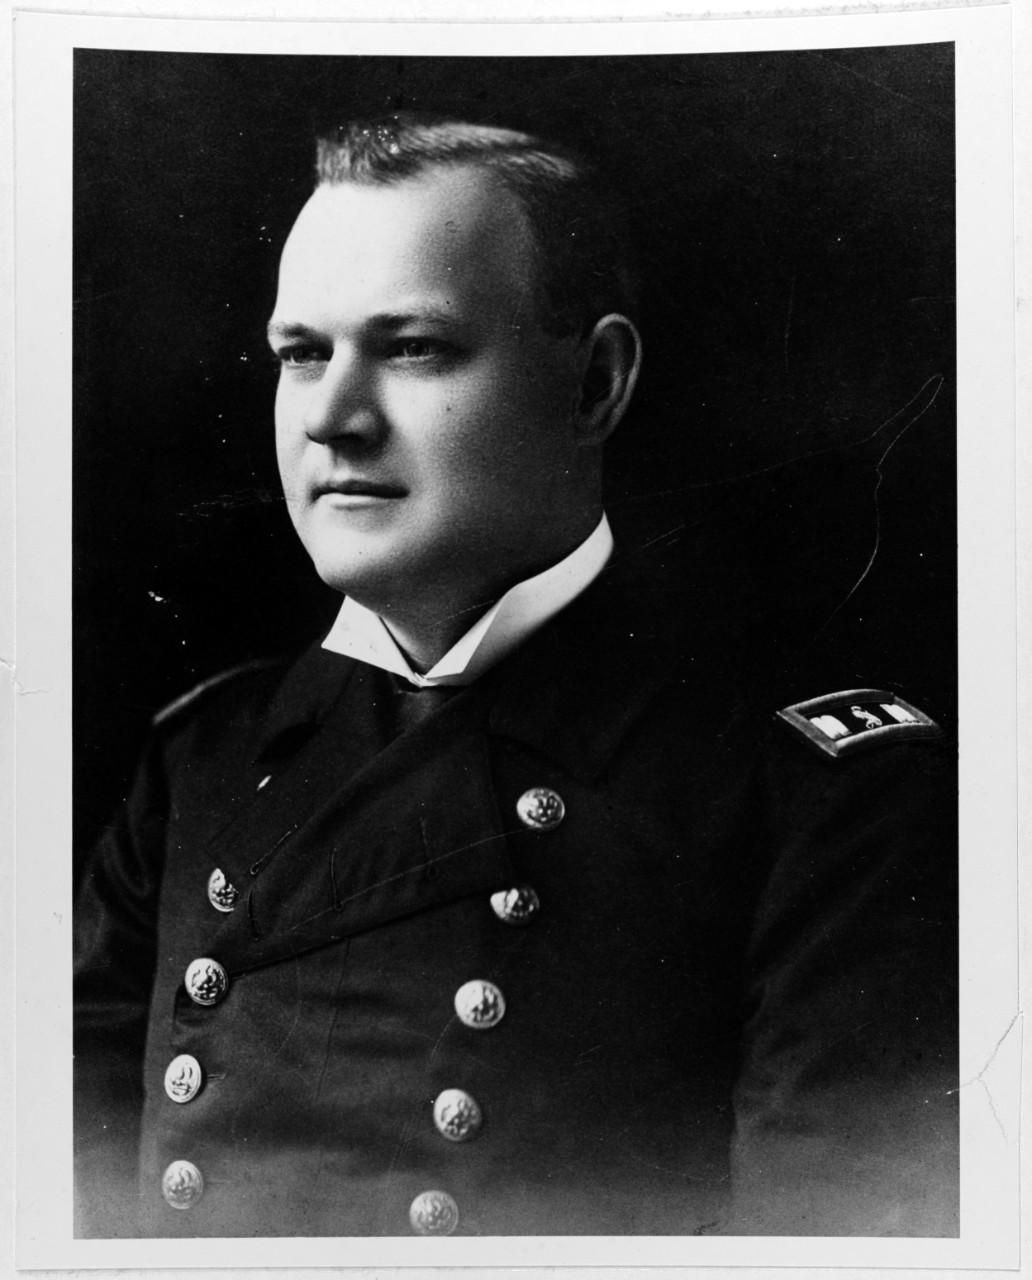 Lieutenant J.W. Crawford